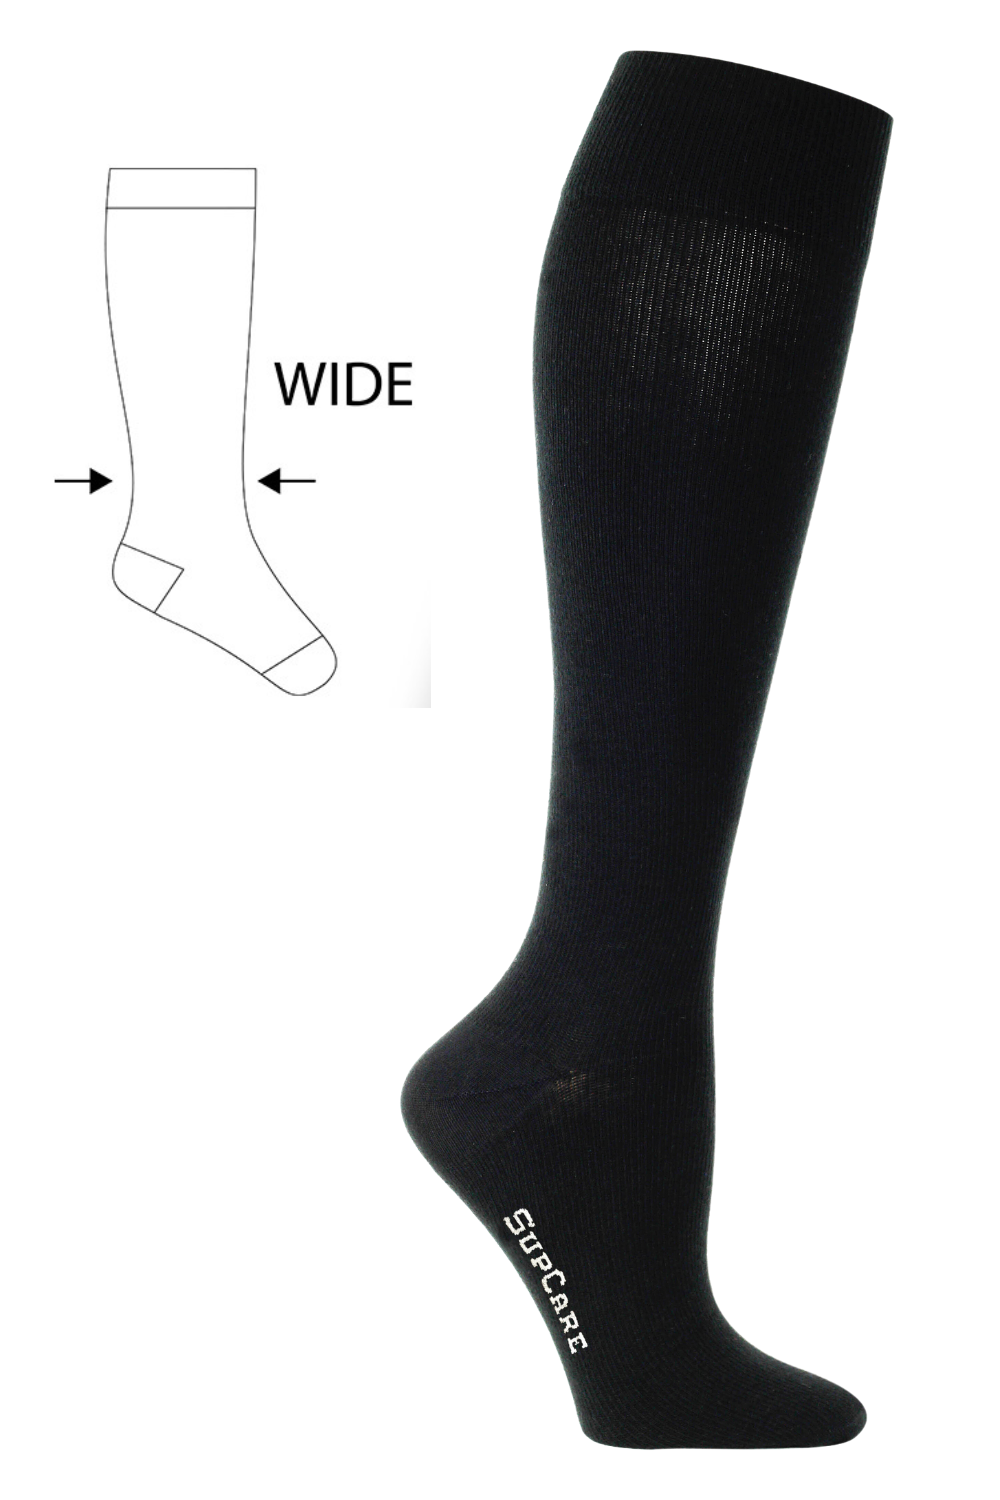 Black Compression socks